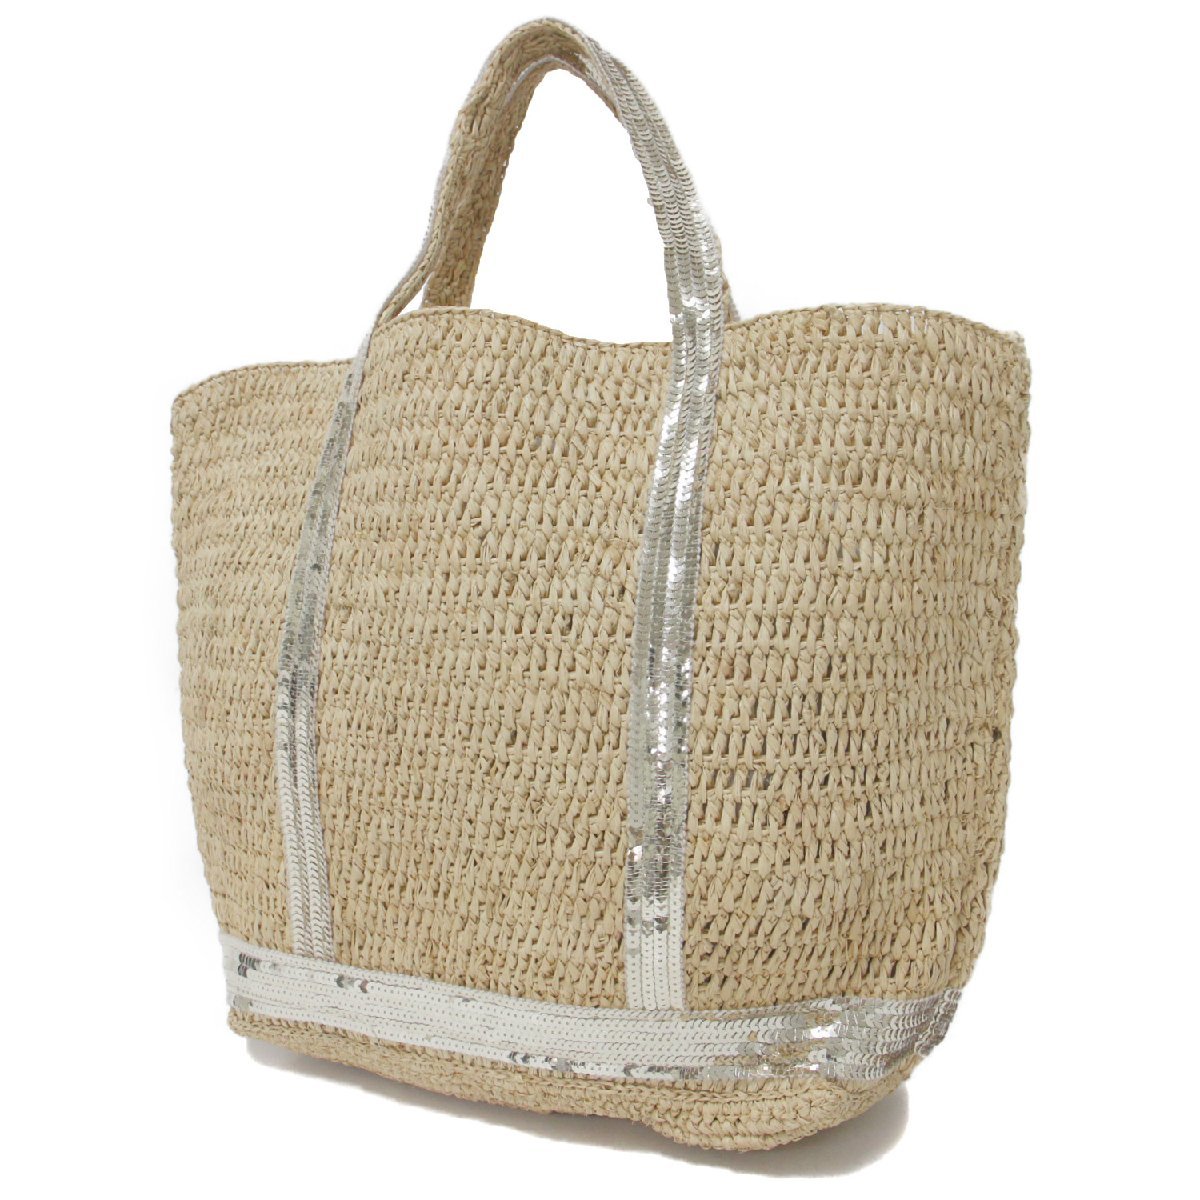 vanessabruno Vanessa Bruno bag tote bag spangled natural material rough .aCABAS MOYEN beige Gold A4 size storage 